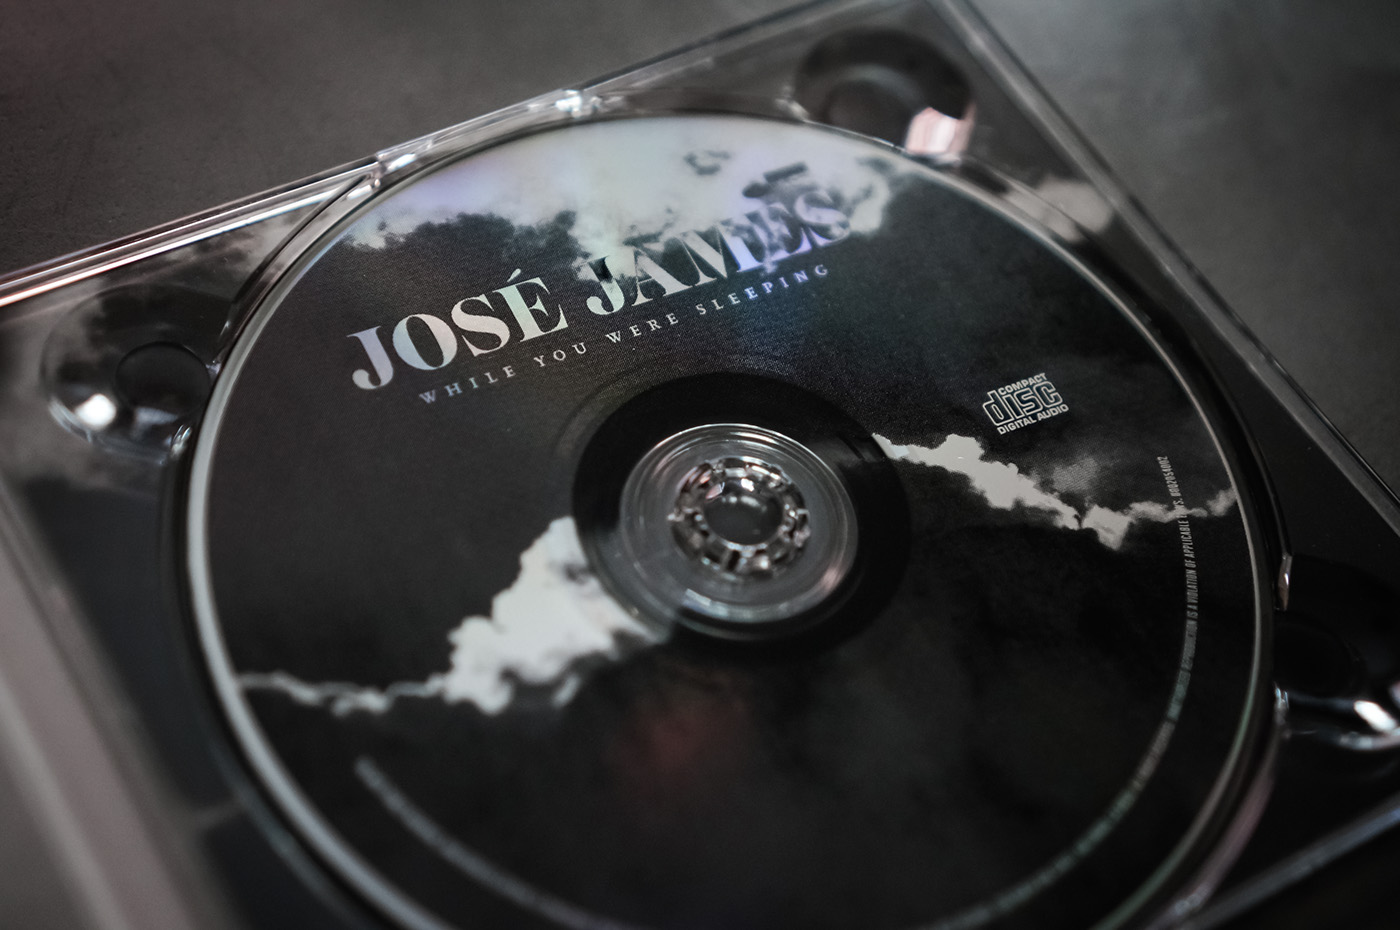 jose james Blue Note jazz rock soul r & b Album cover package cd record vinyl